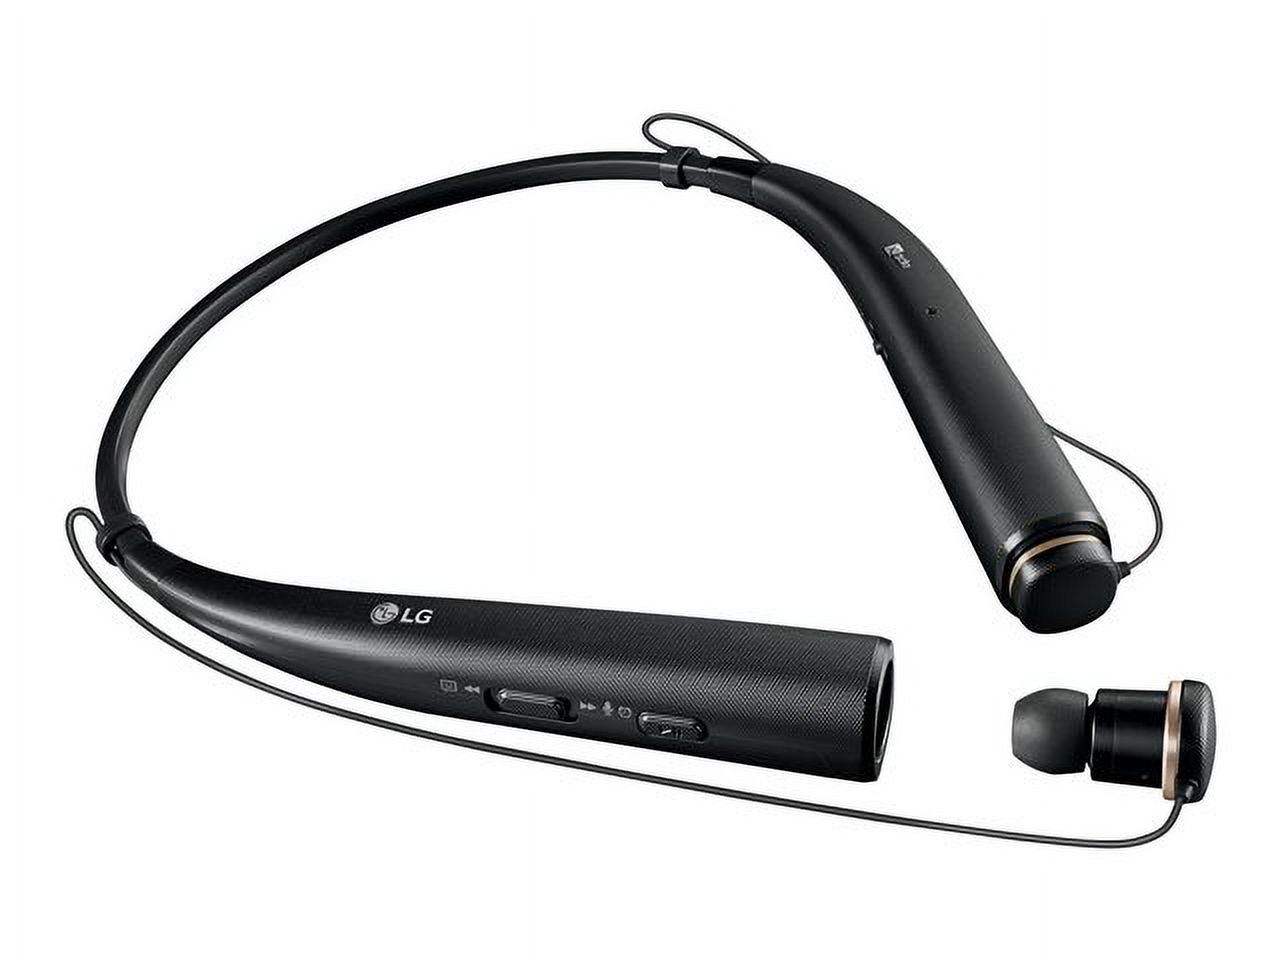 LG Tone Pro HBS-780 Premium Wireless Stereo Neckband Bluetooth Headset - Black - image 6 of 8